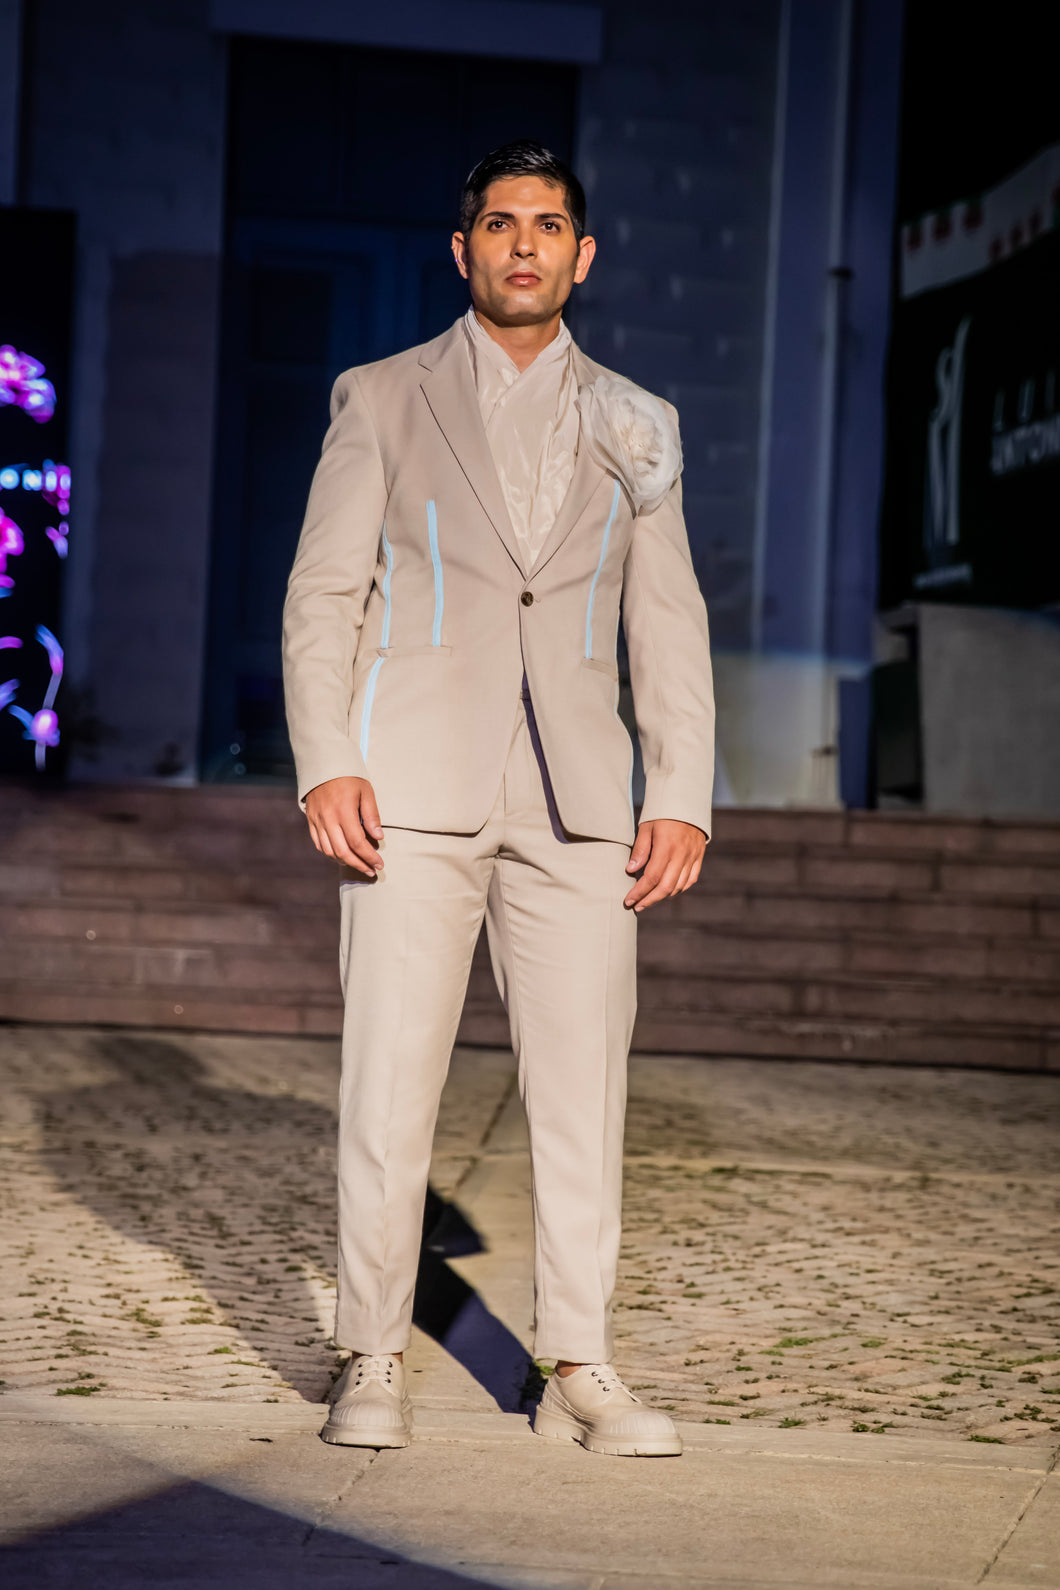 Suit beige with details for men